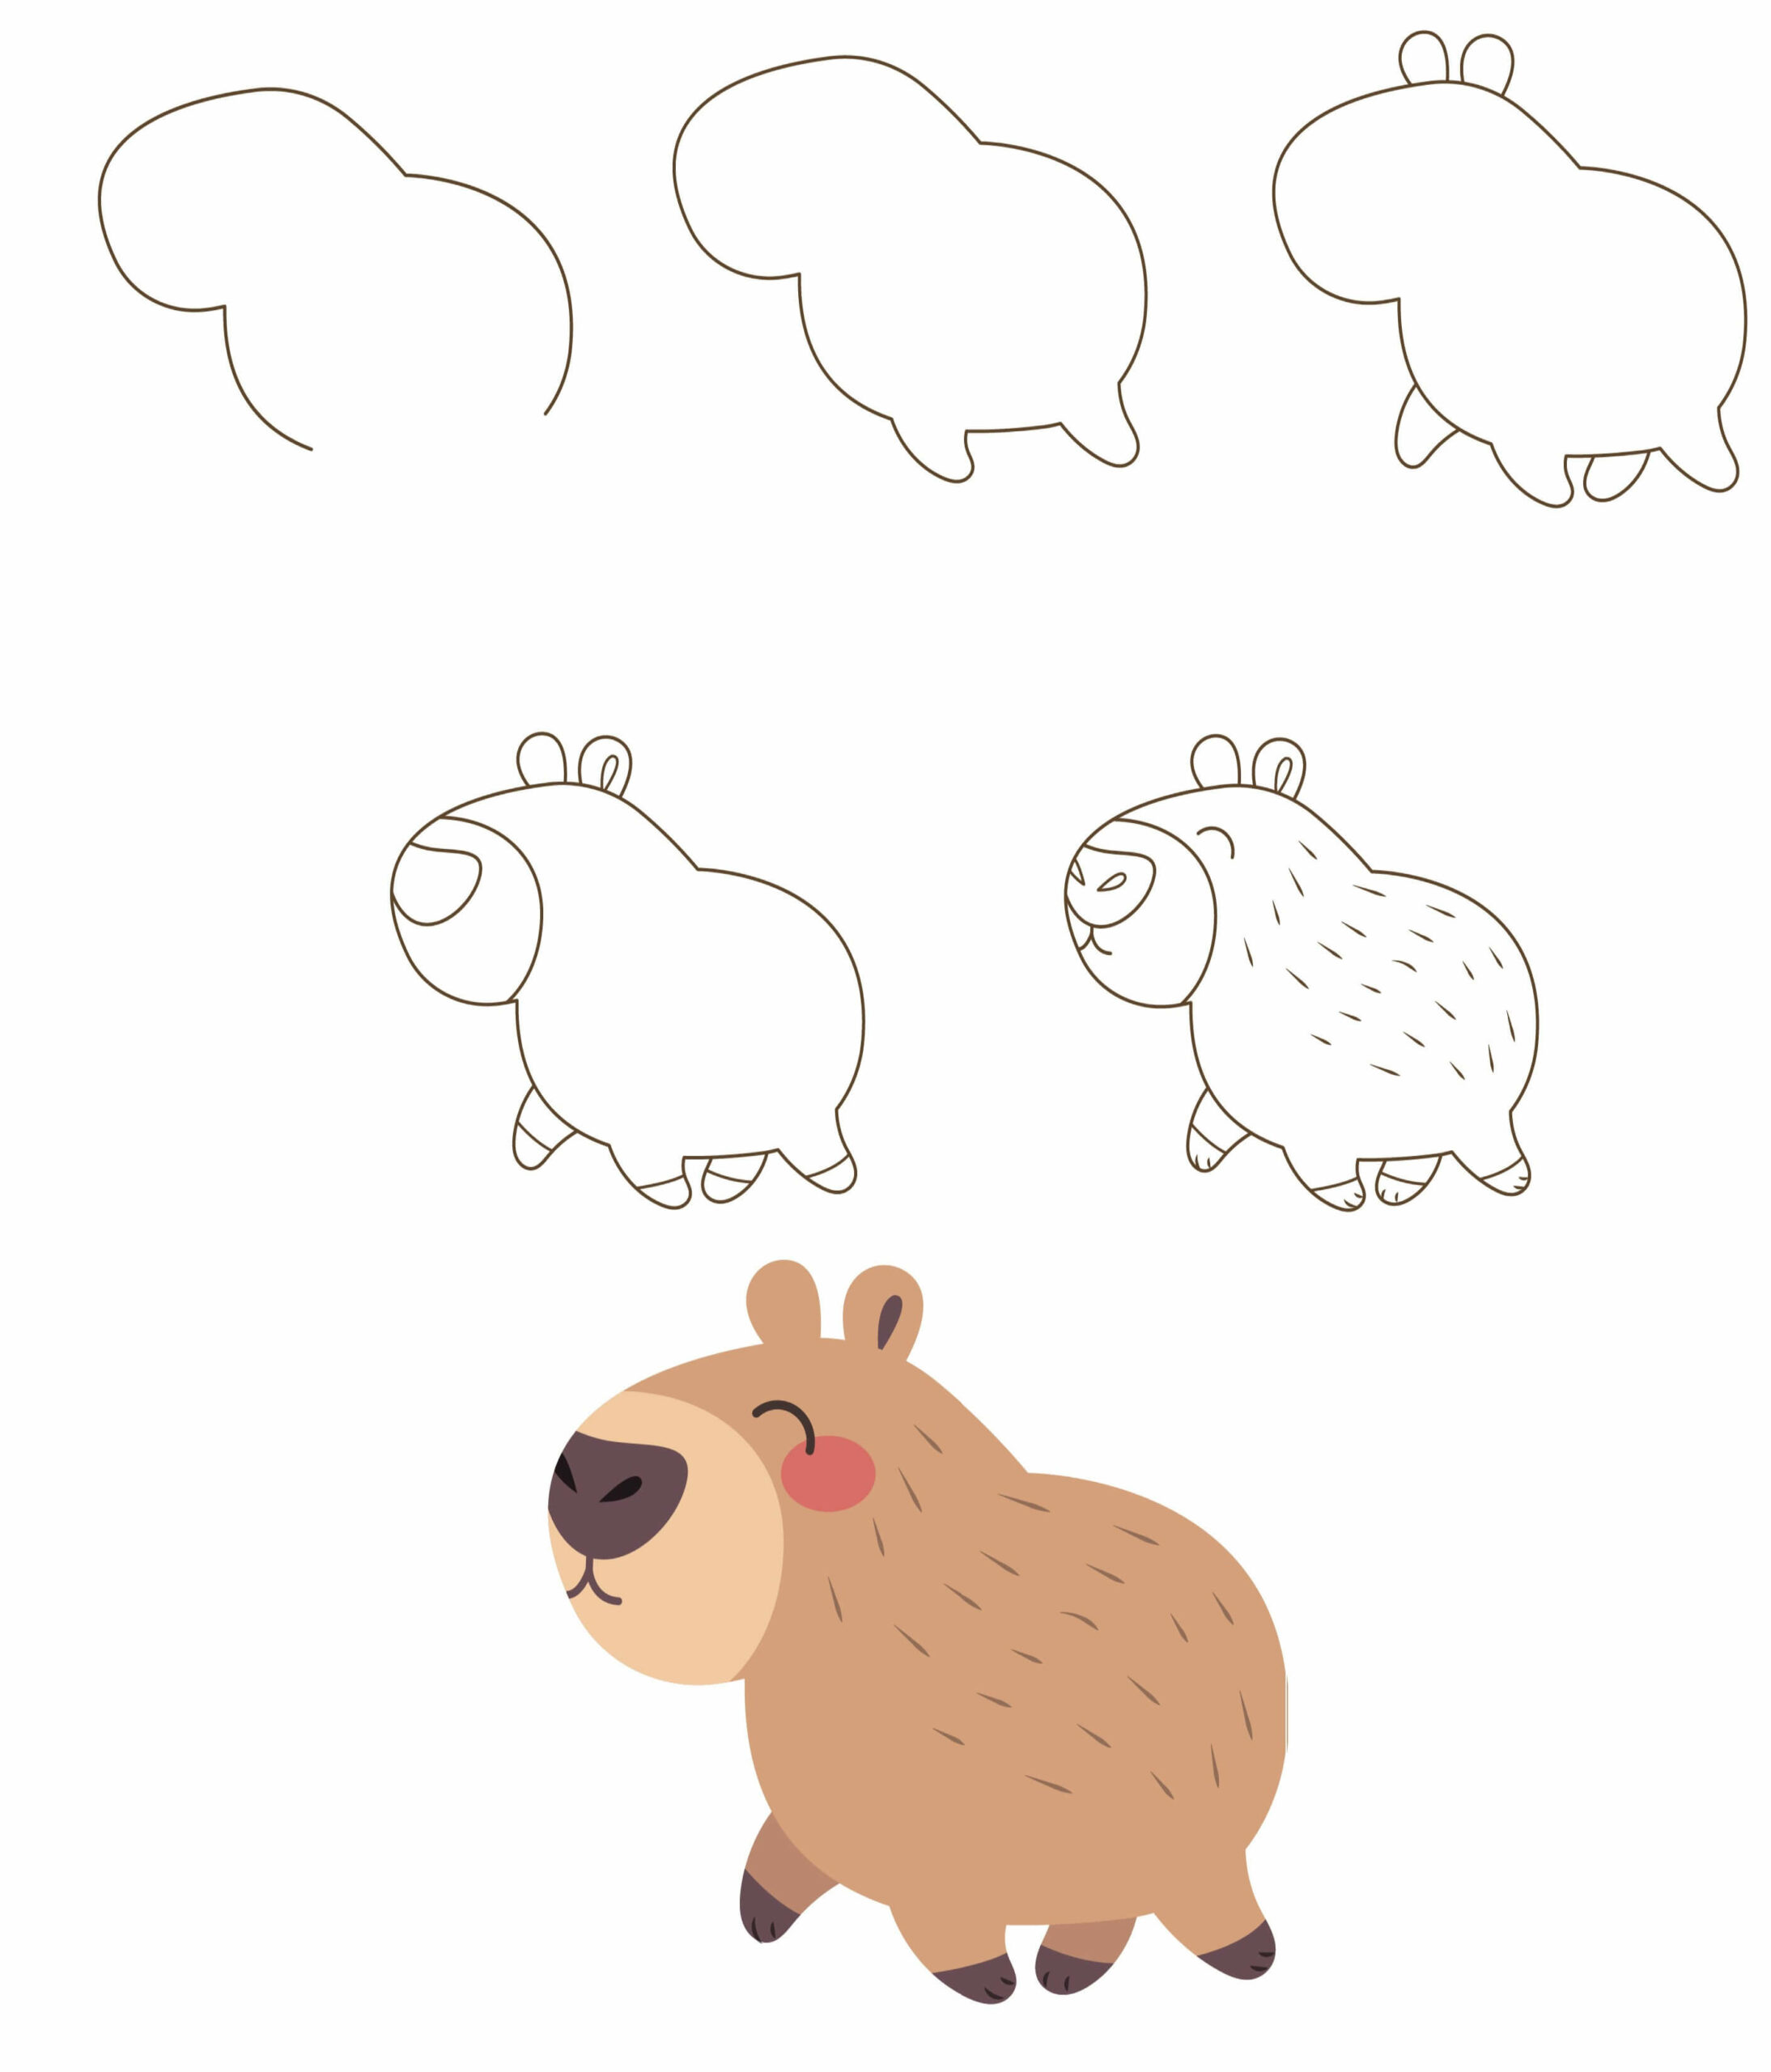 Capybara idea (3) Drawing Ideas